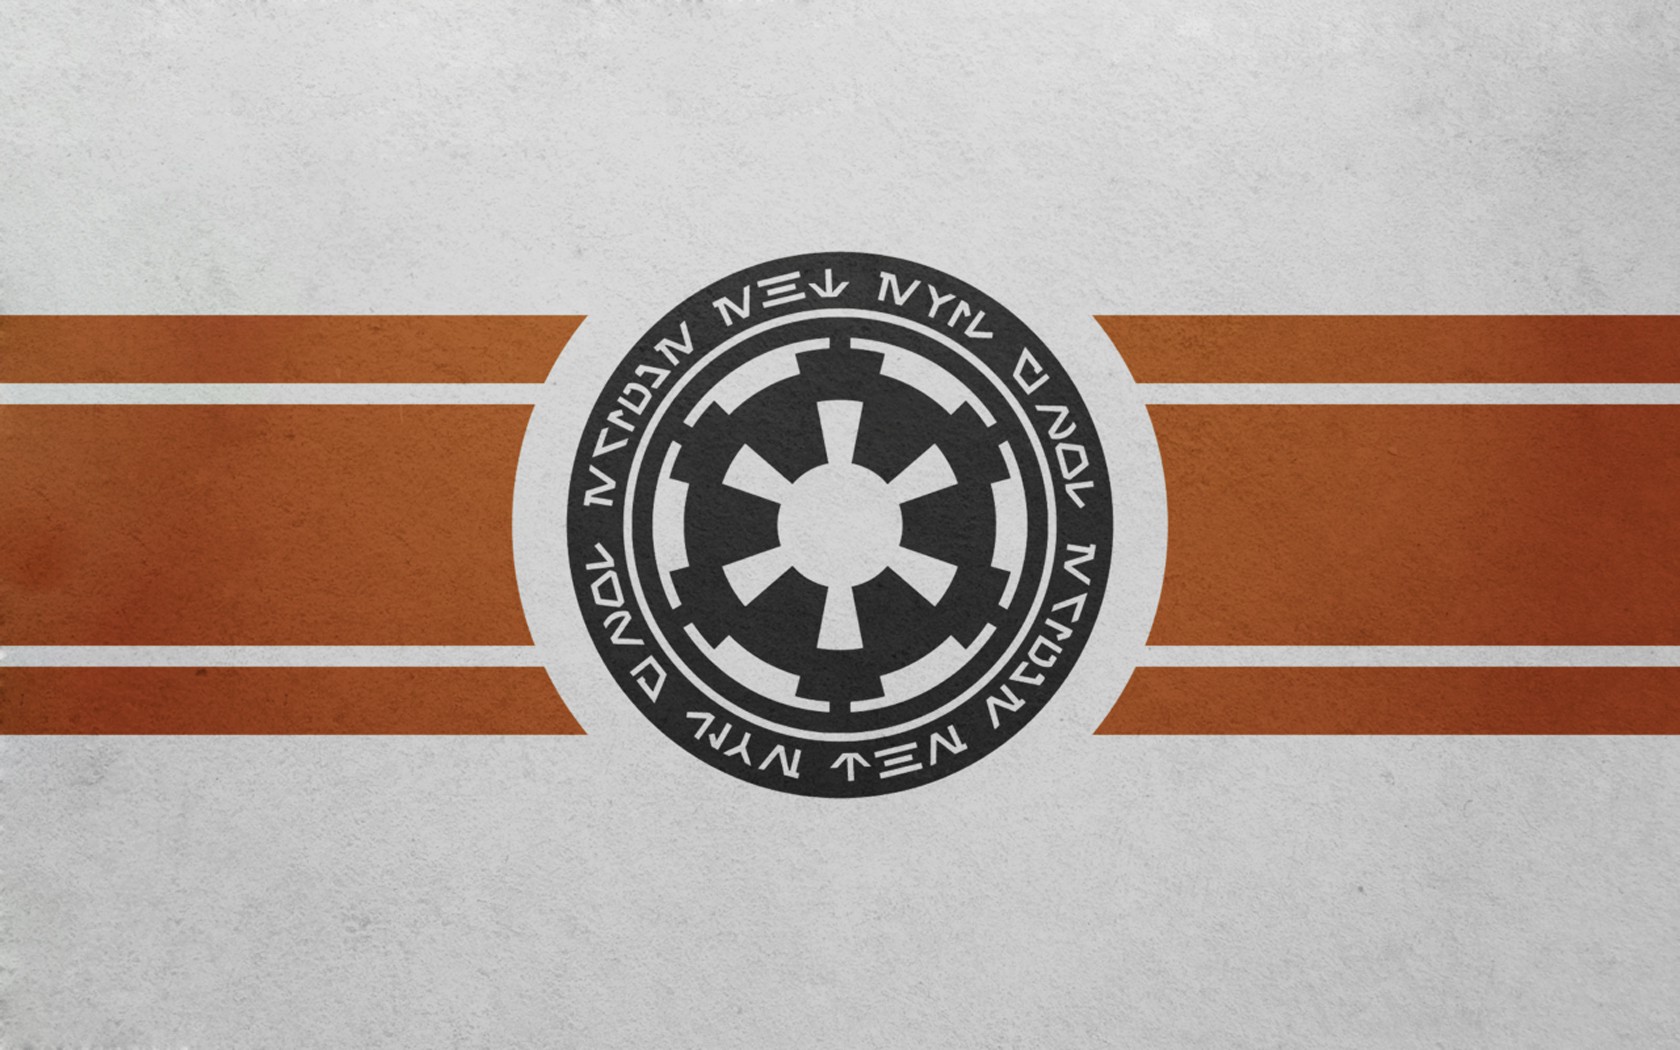 Star Wars, Galactic Empire Wallpaper